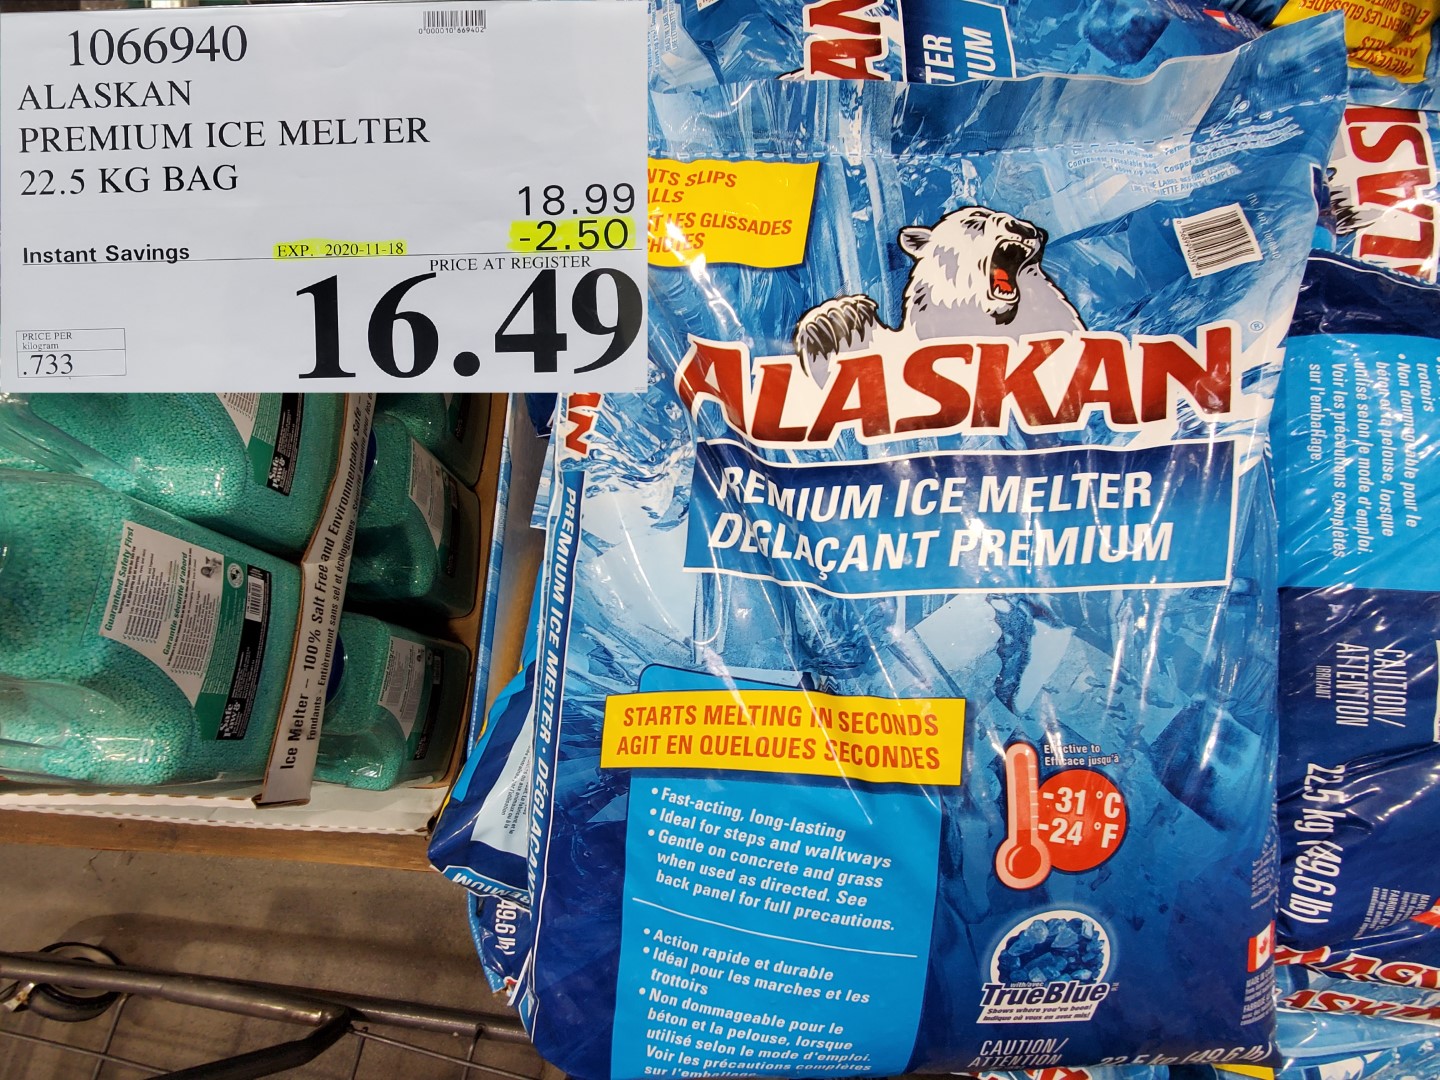 Alaskan premium ice melter